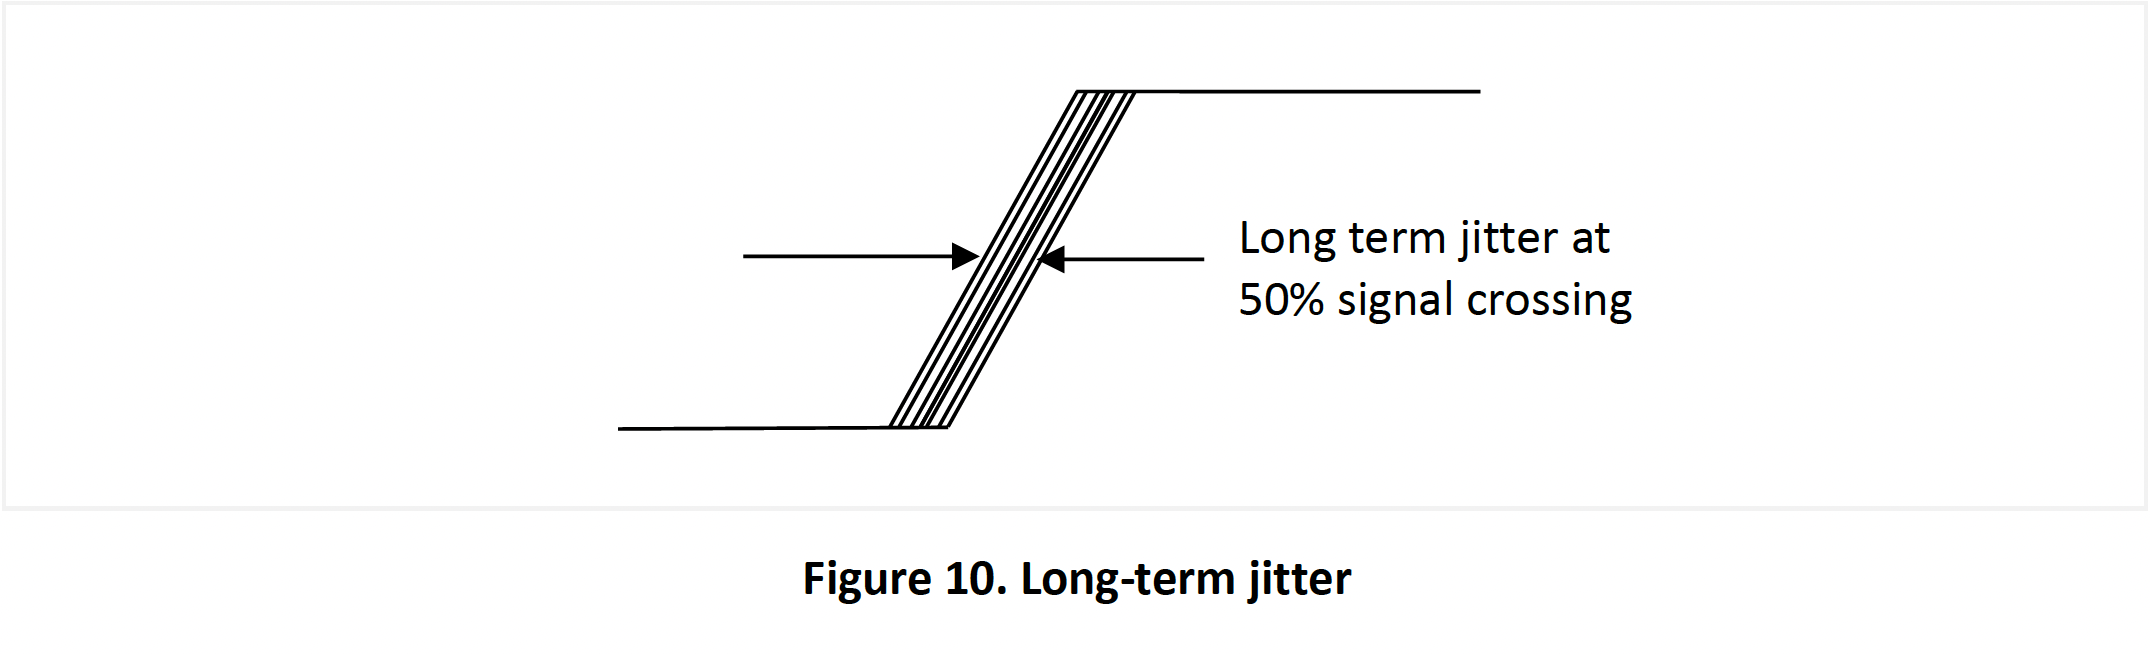 Figure 10. Long-term jitter